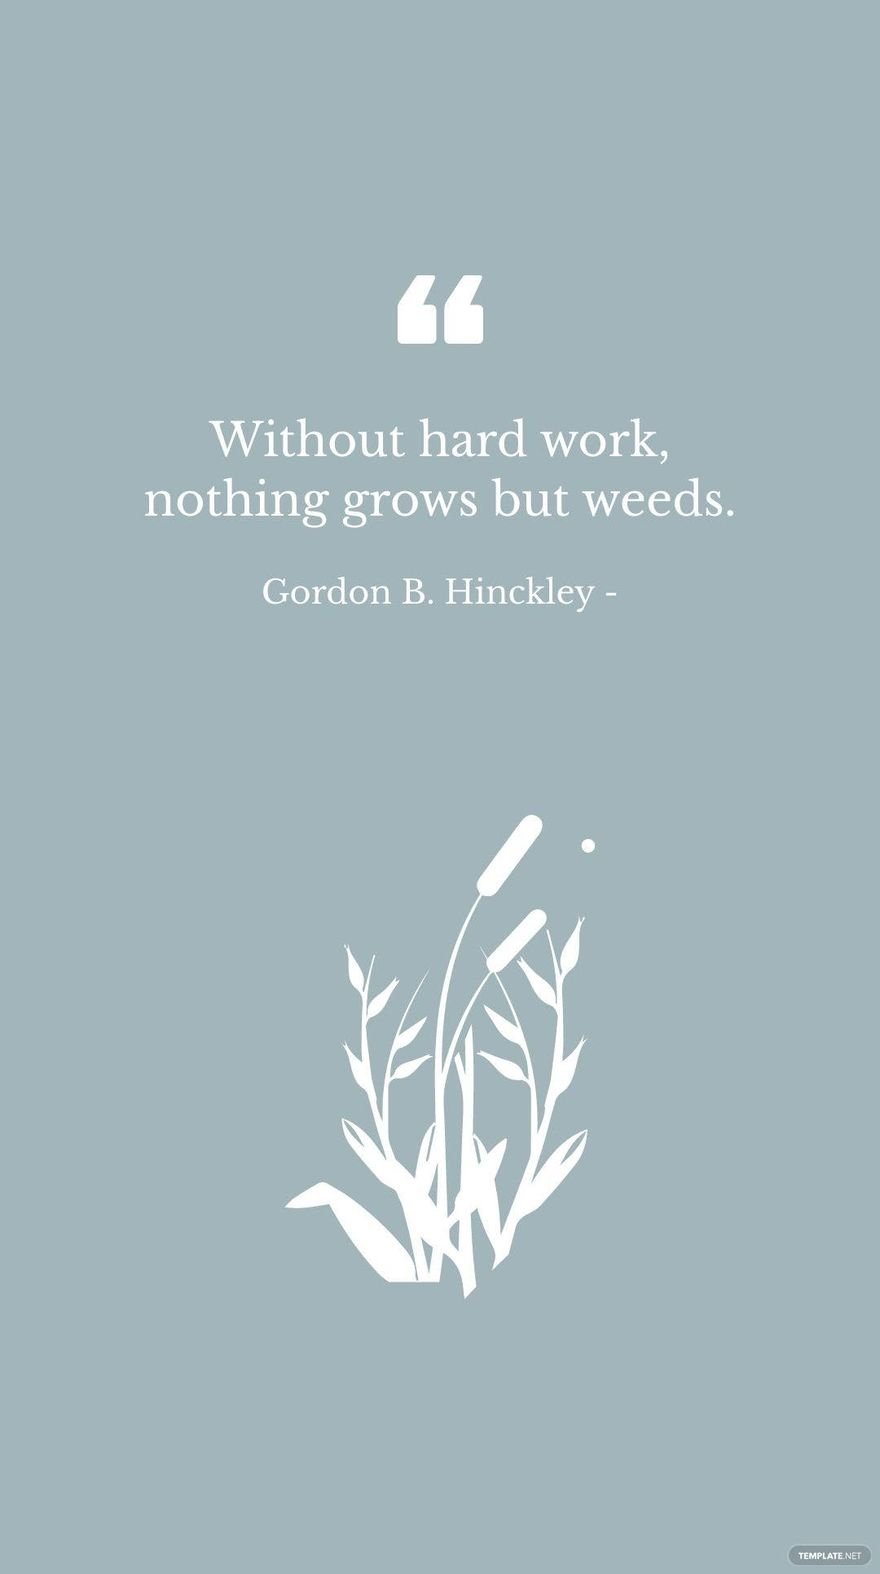 Free Gordon B. Hinckley - Without hard work, nothing grows but weeds. in JPG